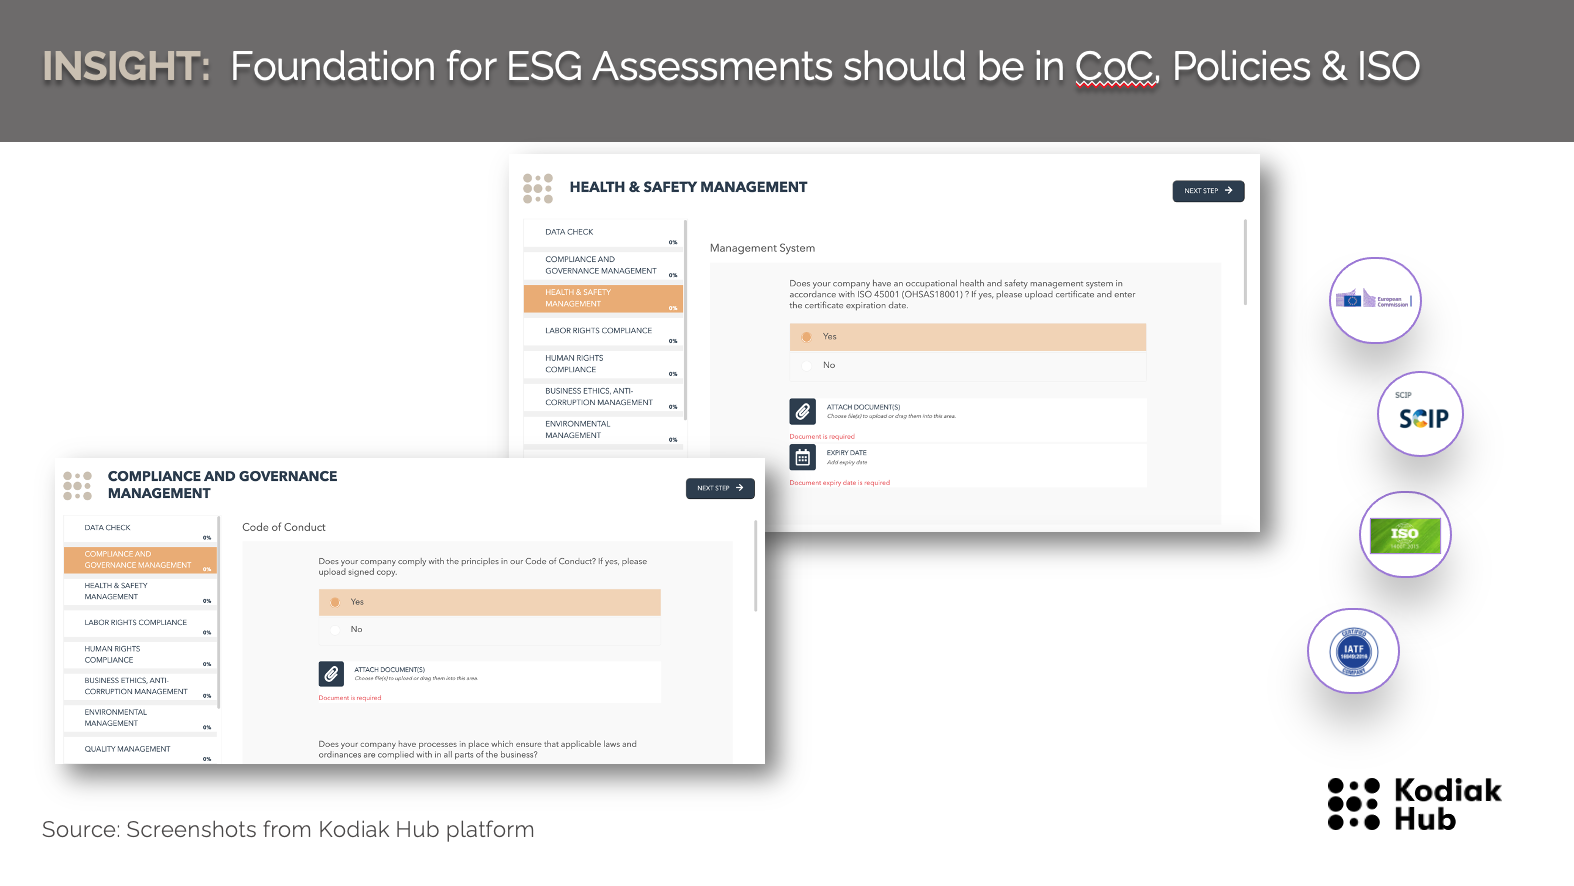 ESG Data Management Software